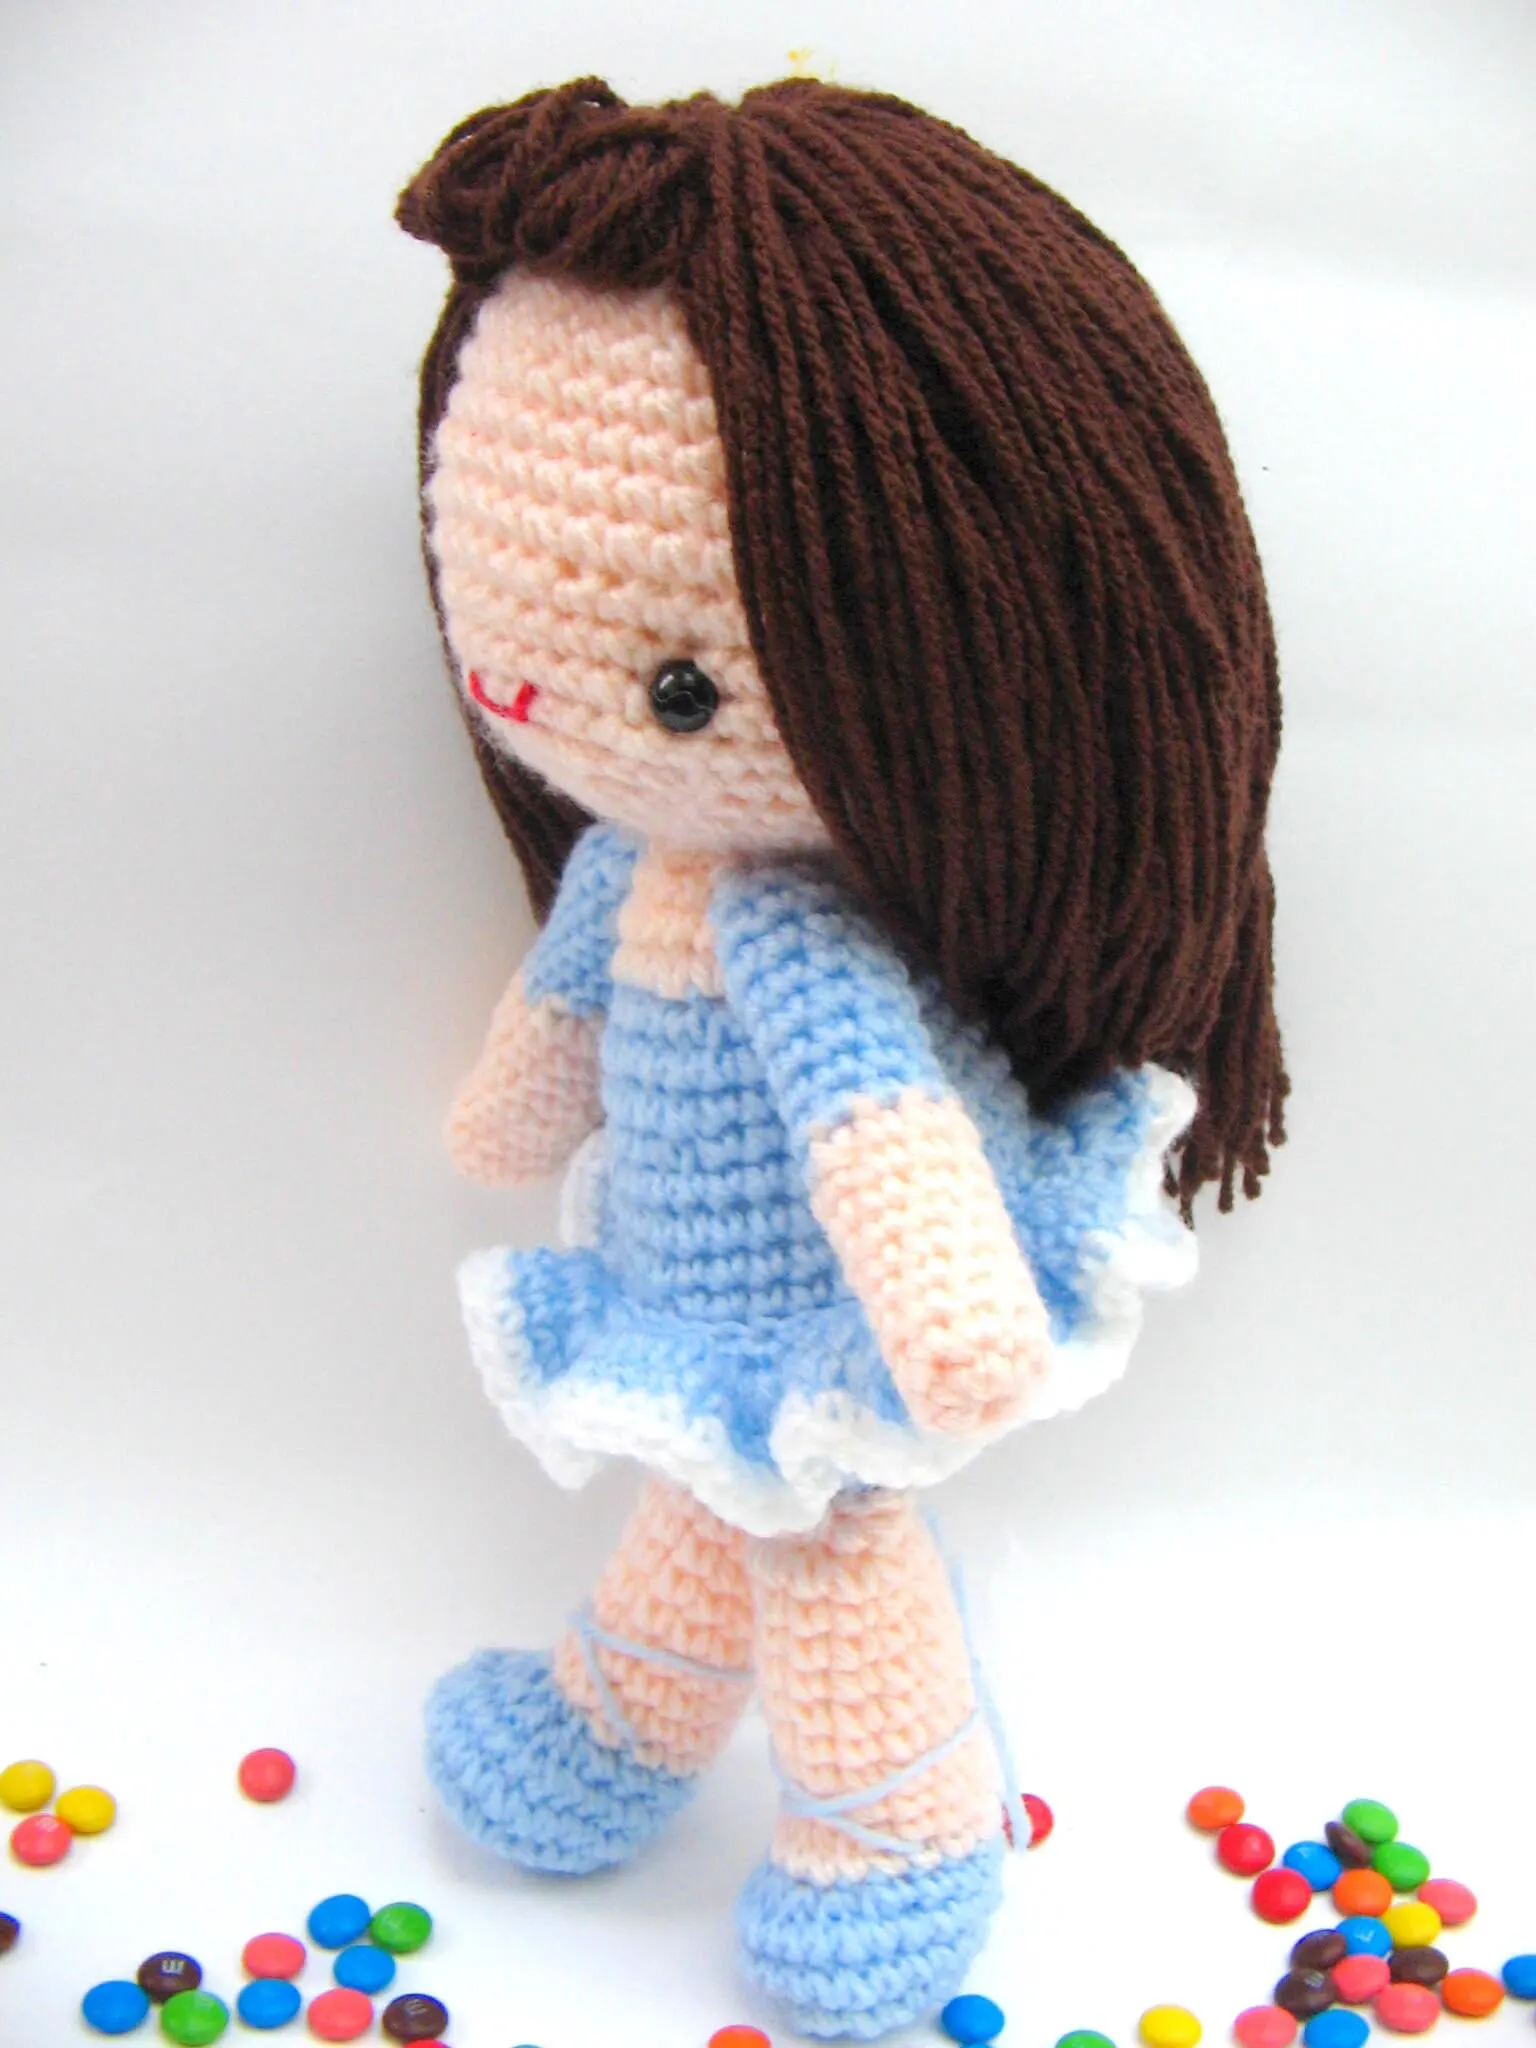 ballerina crochet amigurumi  doll free pattern.